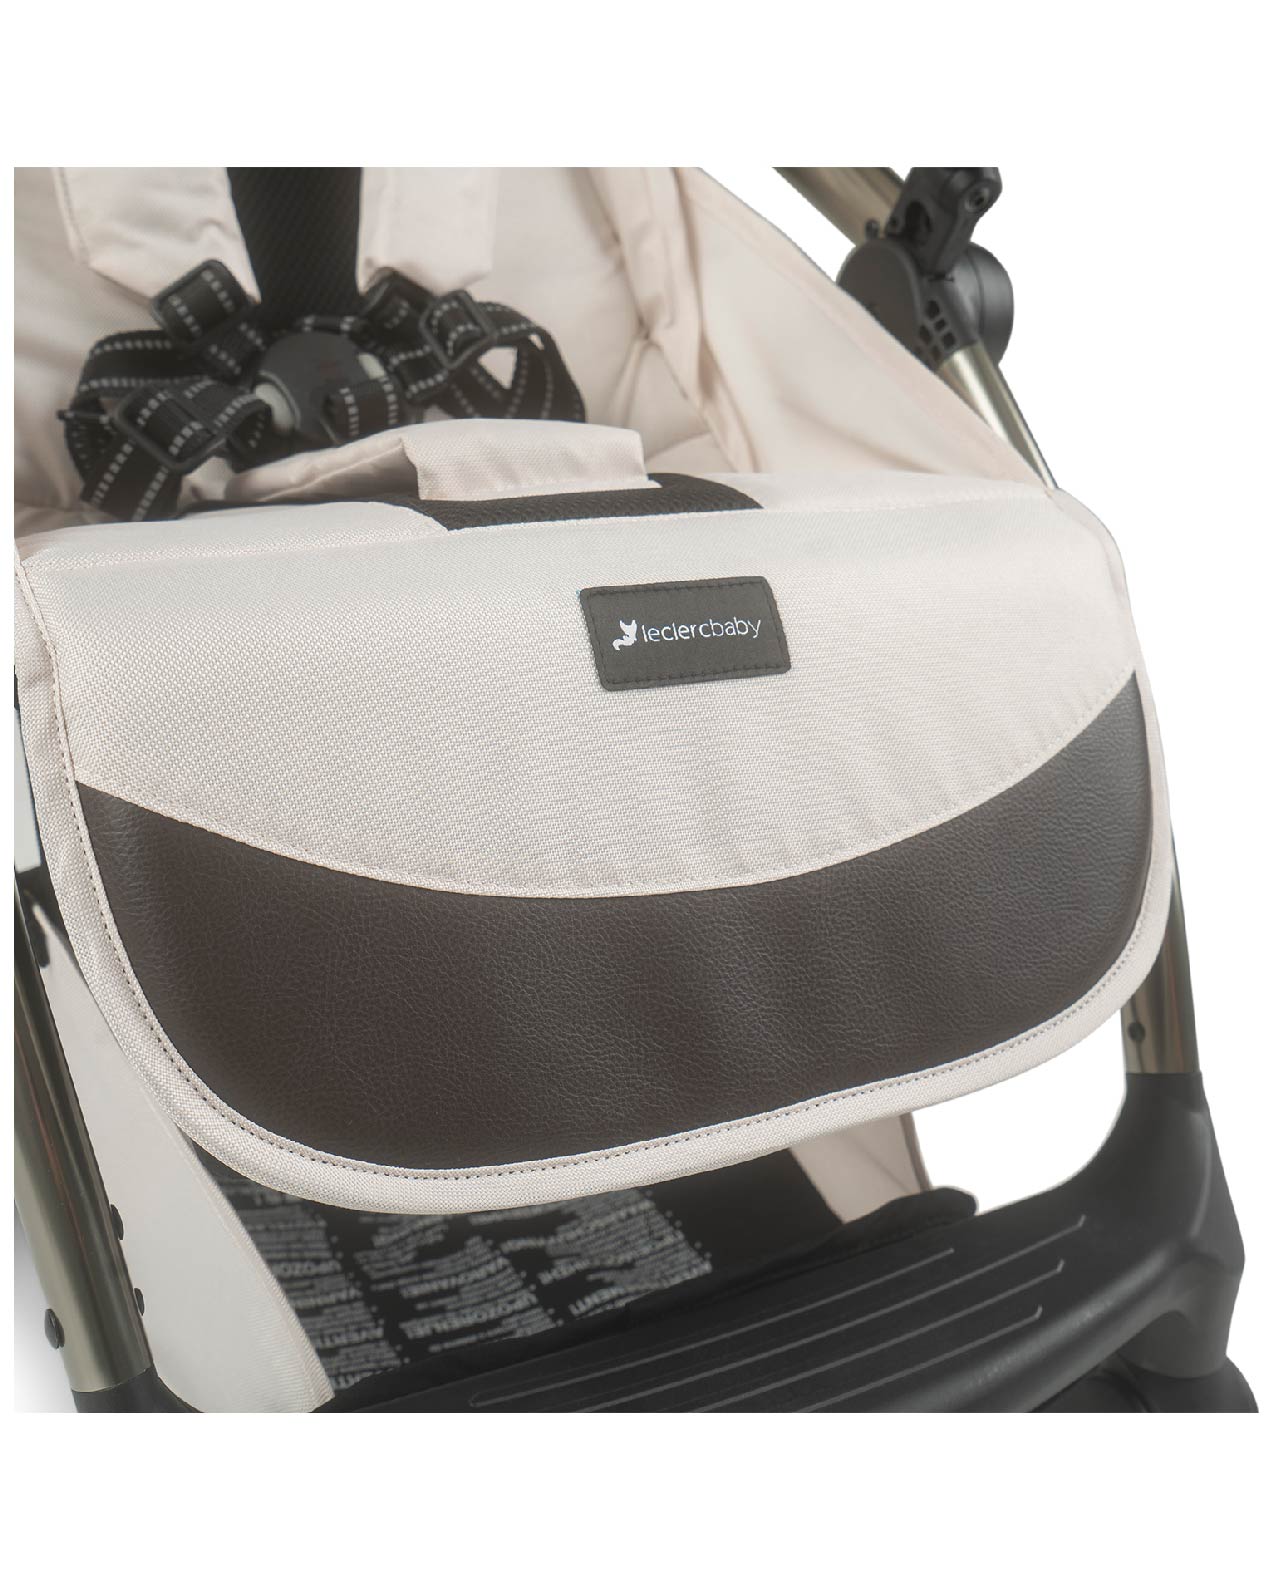 Influencer Air Twin Stroller Bundle : Violet Grey Stroller + Cloudy Cream Stroller